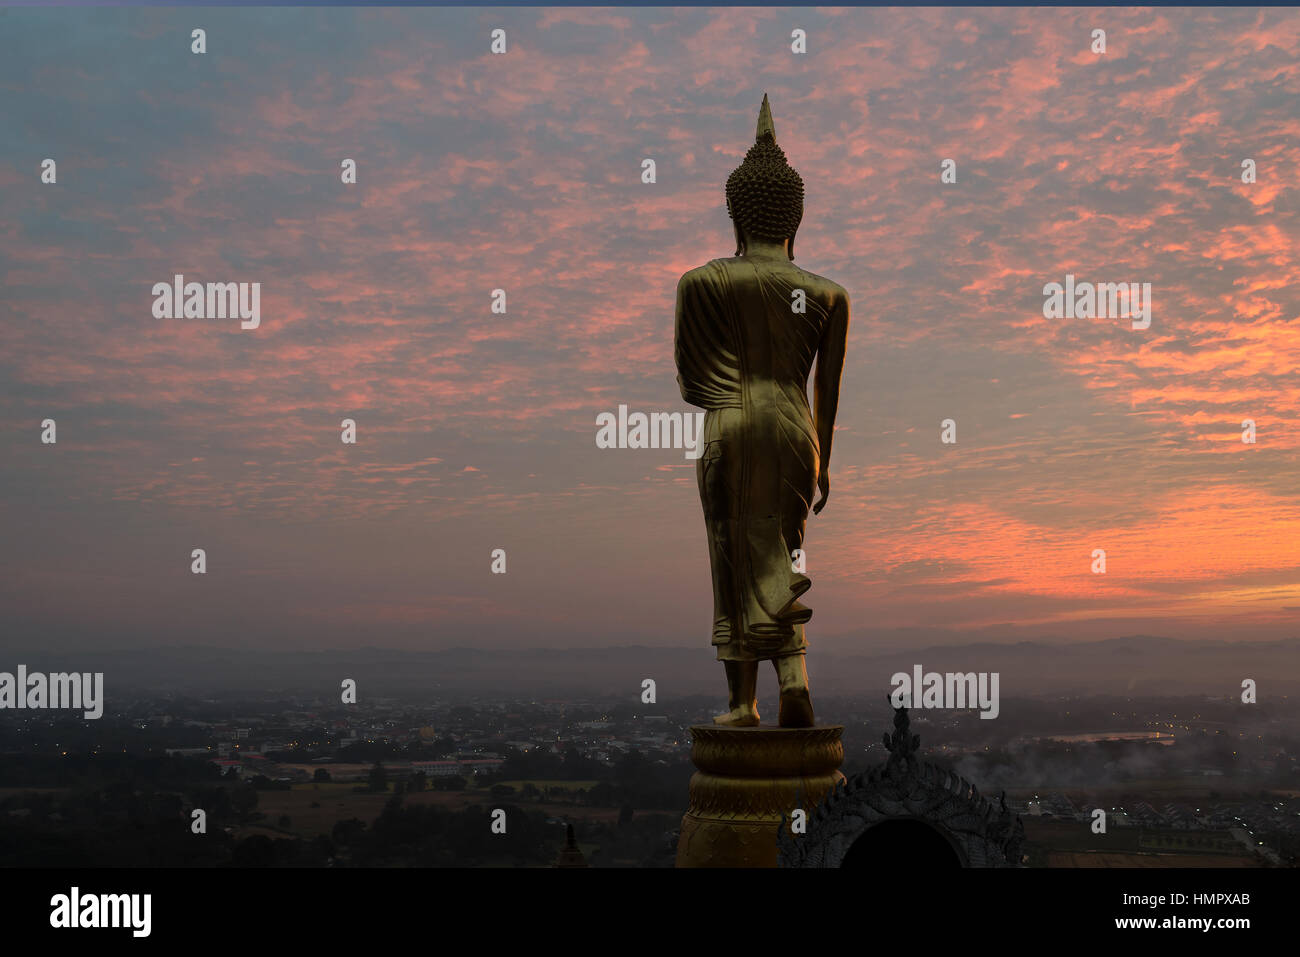 Sonnenaufgang am goldenen Buddha-Statue im Tempel Khao Noi, Nan Provinz, Thailand. Stockfoto